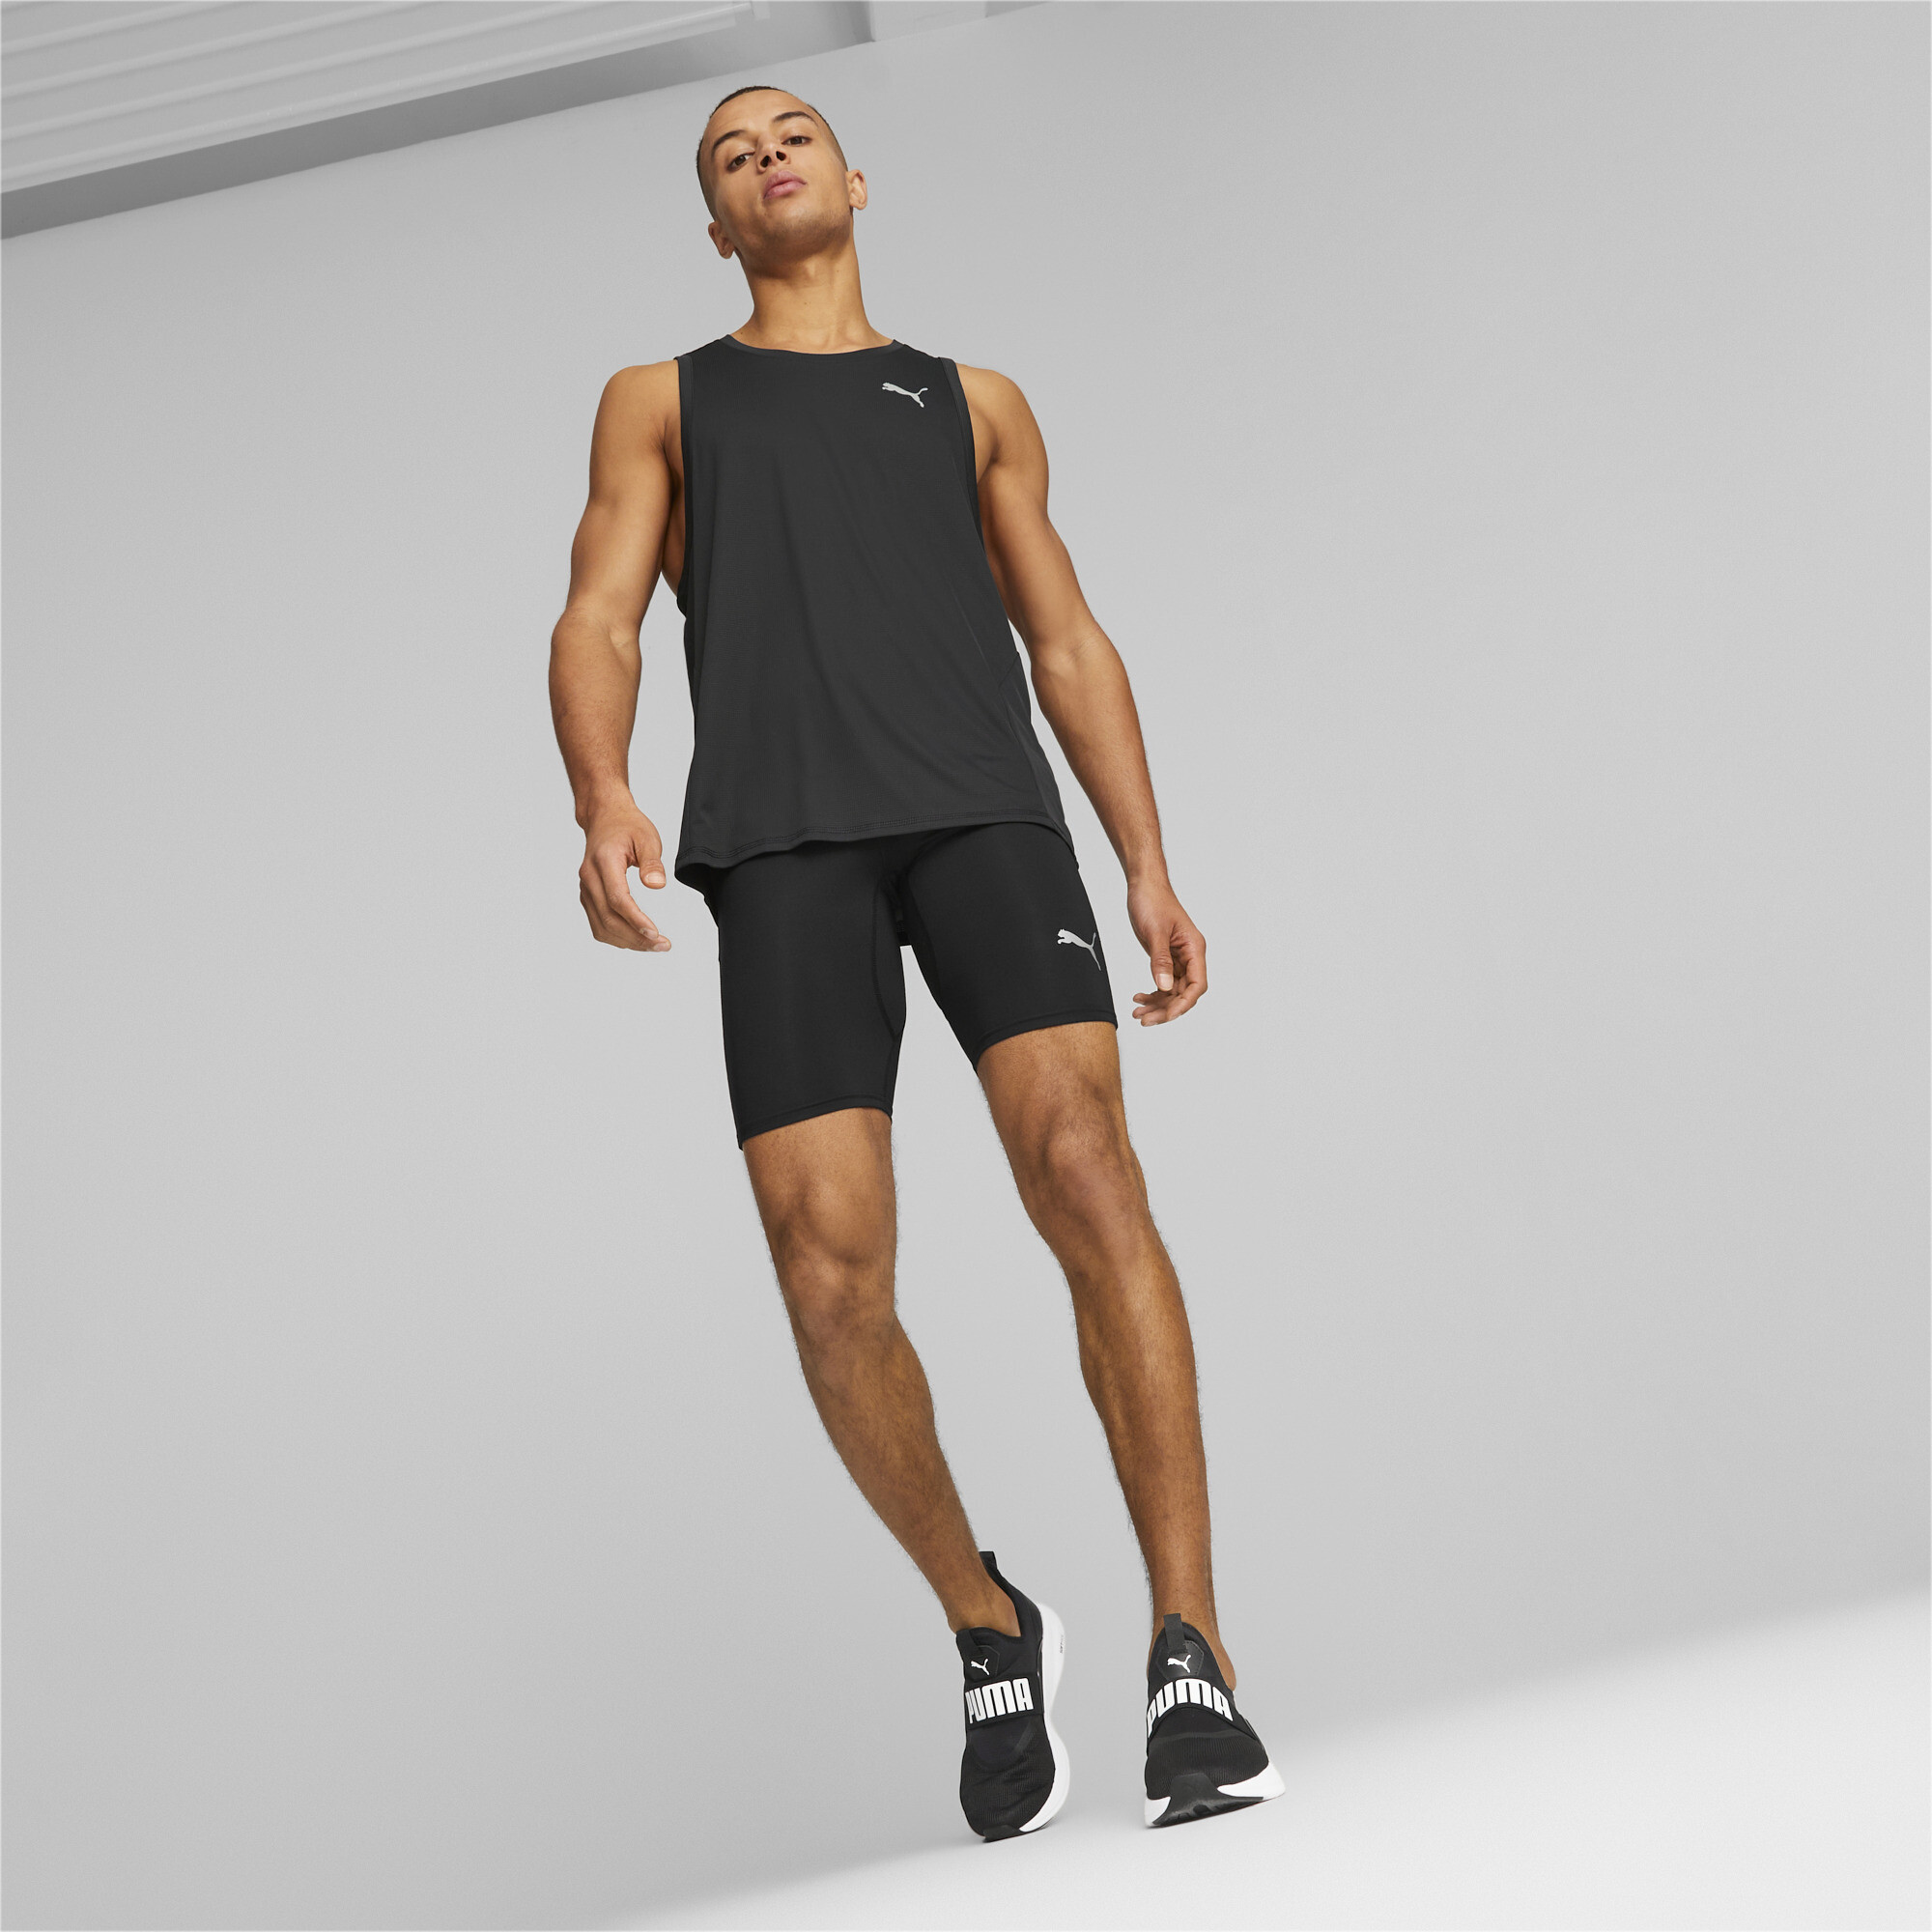 Men's Puma Run Favourite Tight Running Shorts, Black, Size L, Clothing